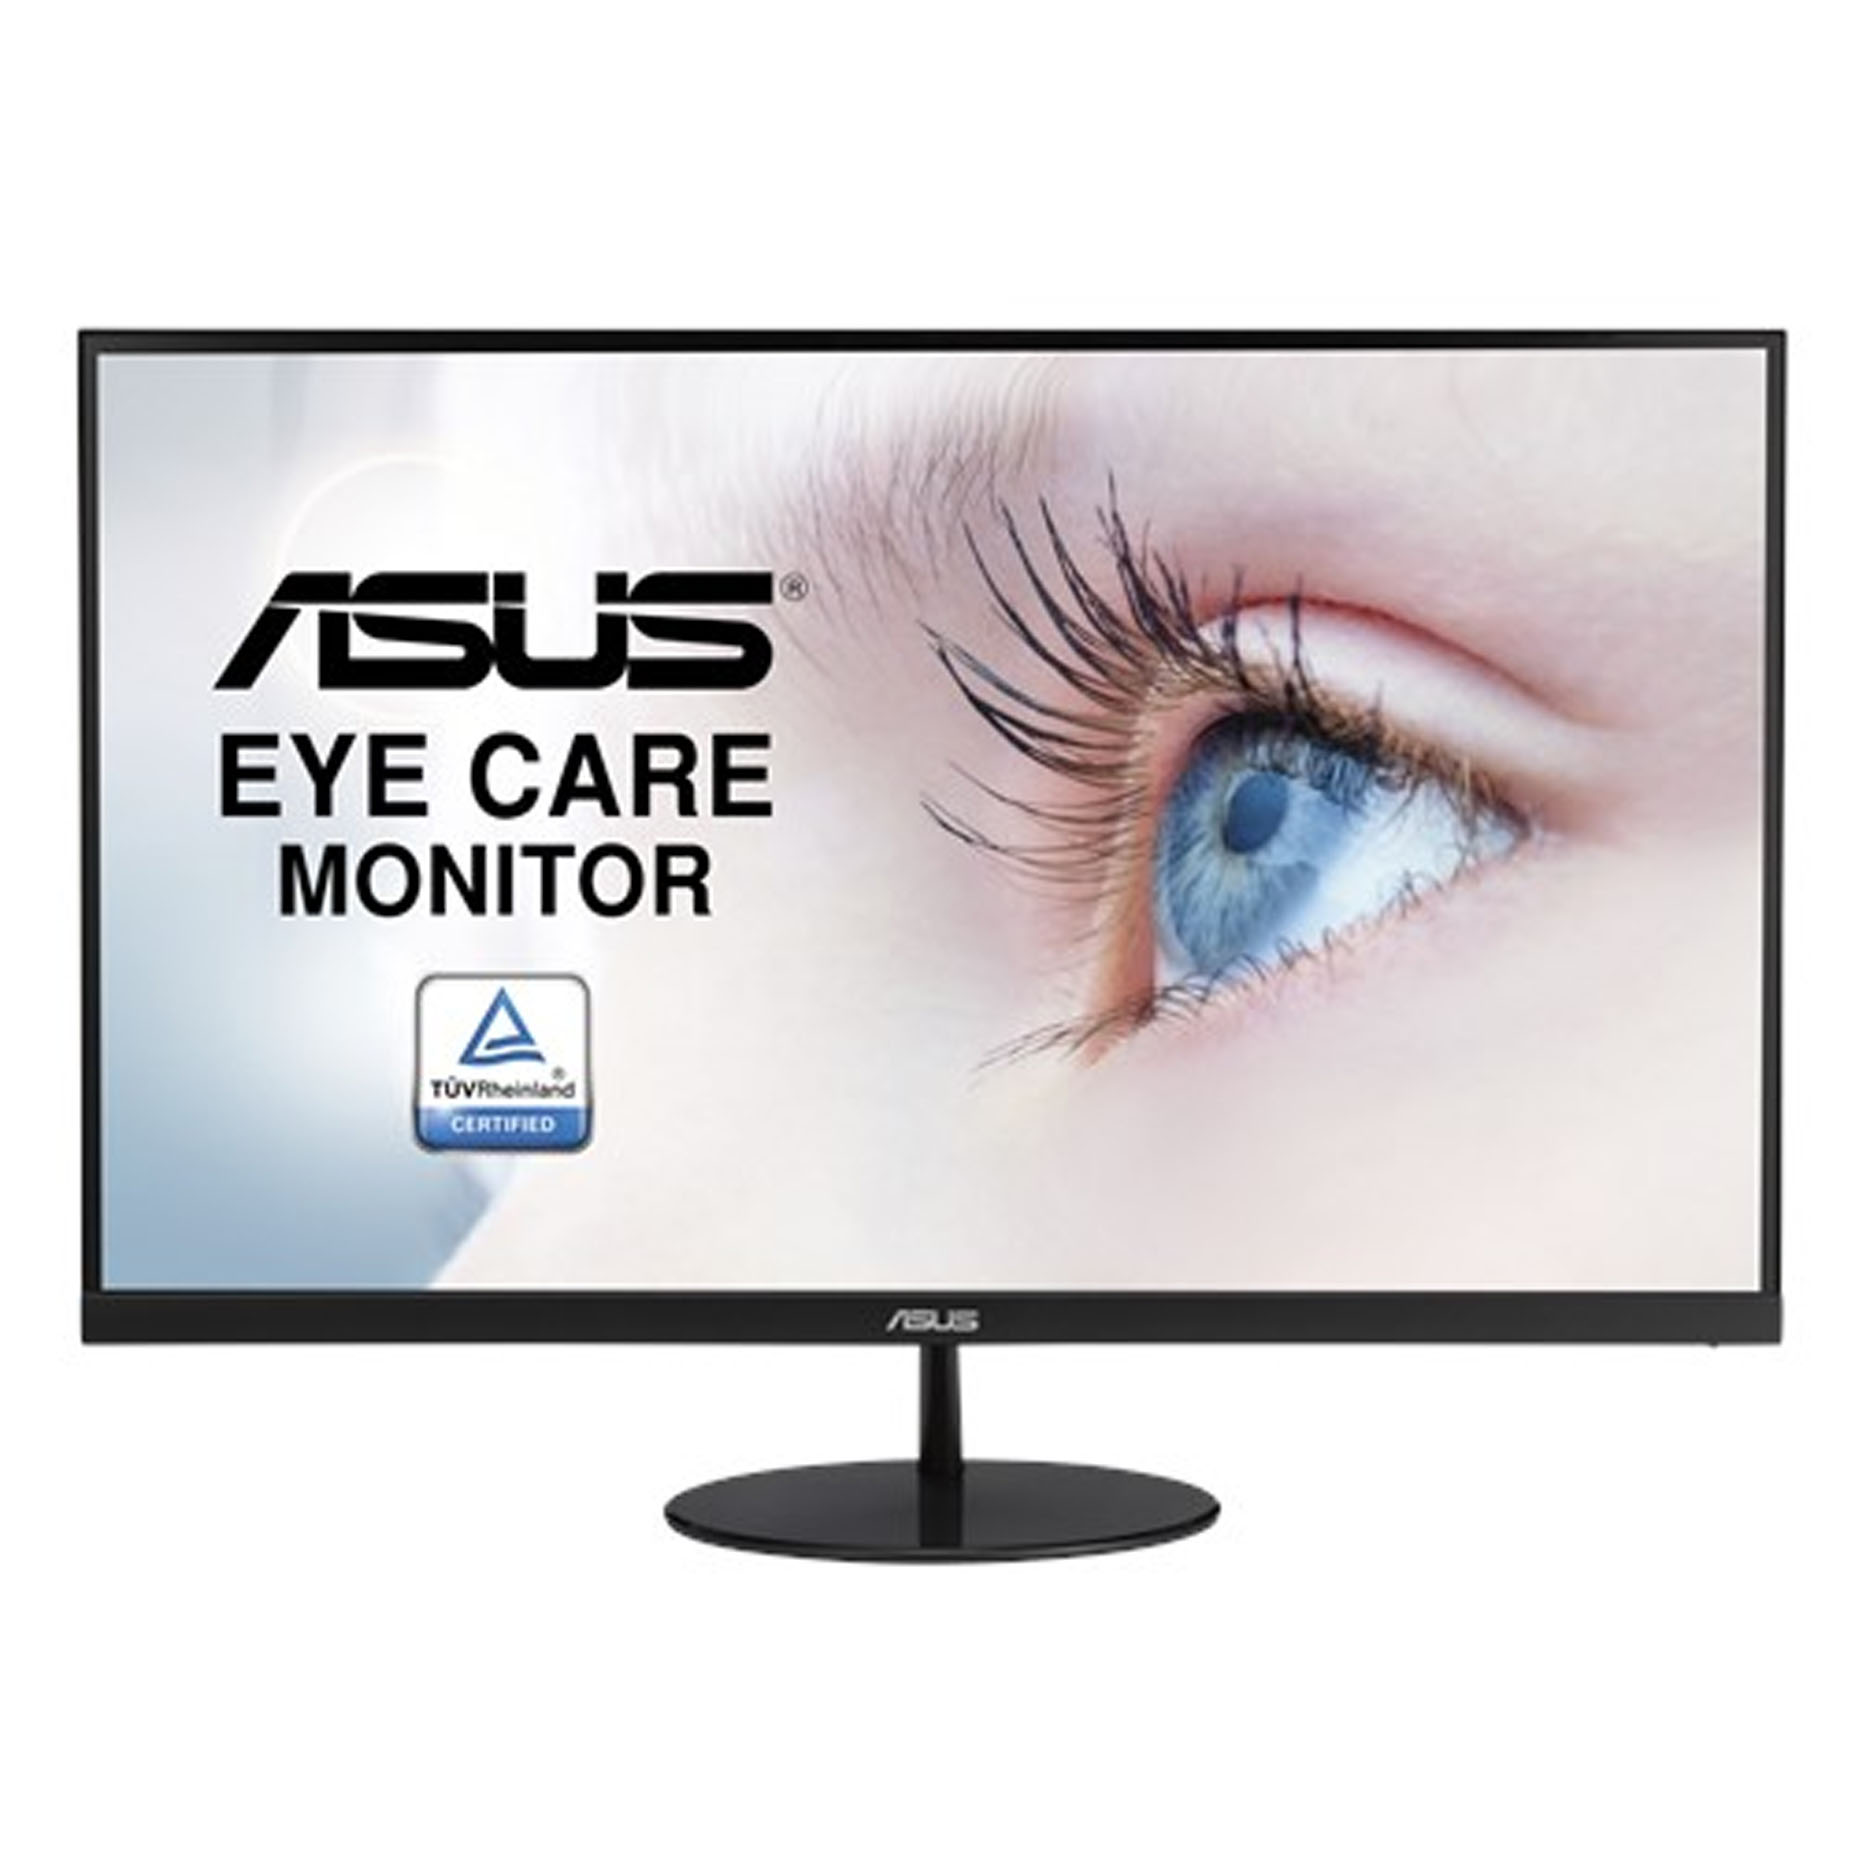 Harga Jual ASUS VL249HE Eye Care IPS Monitor 23.8 Inch